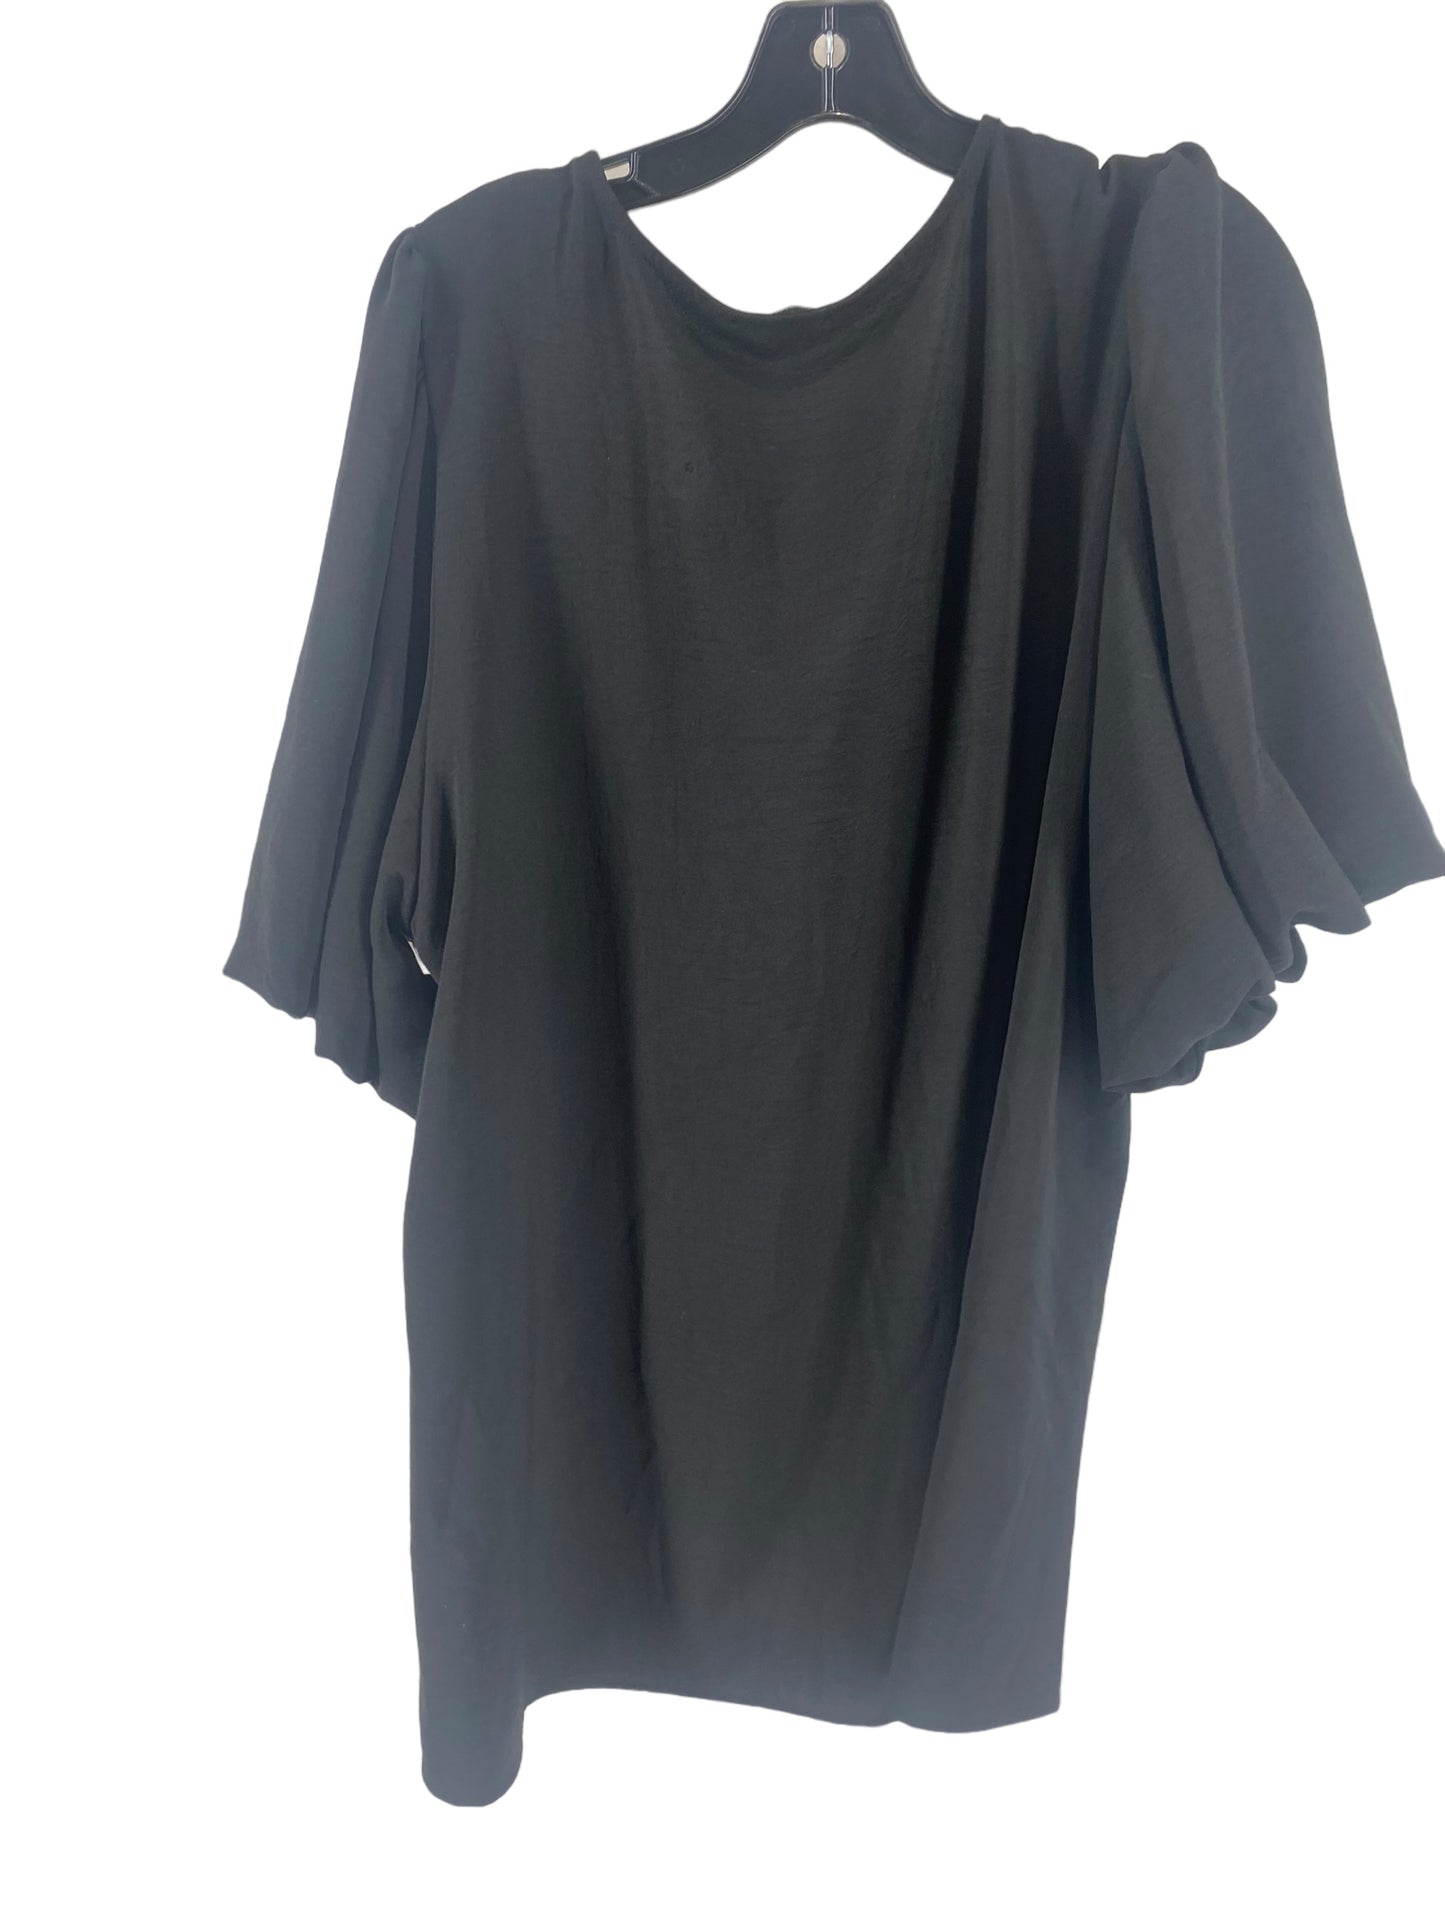 Black Top Short Sleeve Jodifl, Size 2x